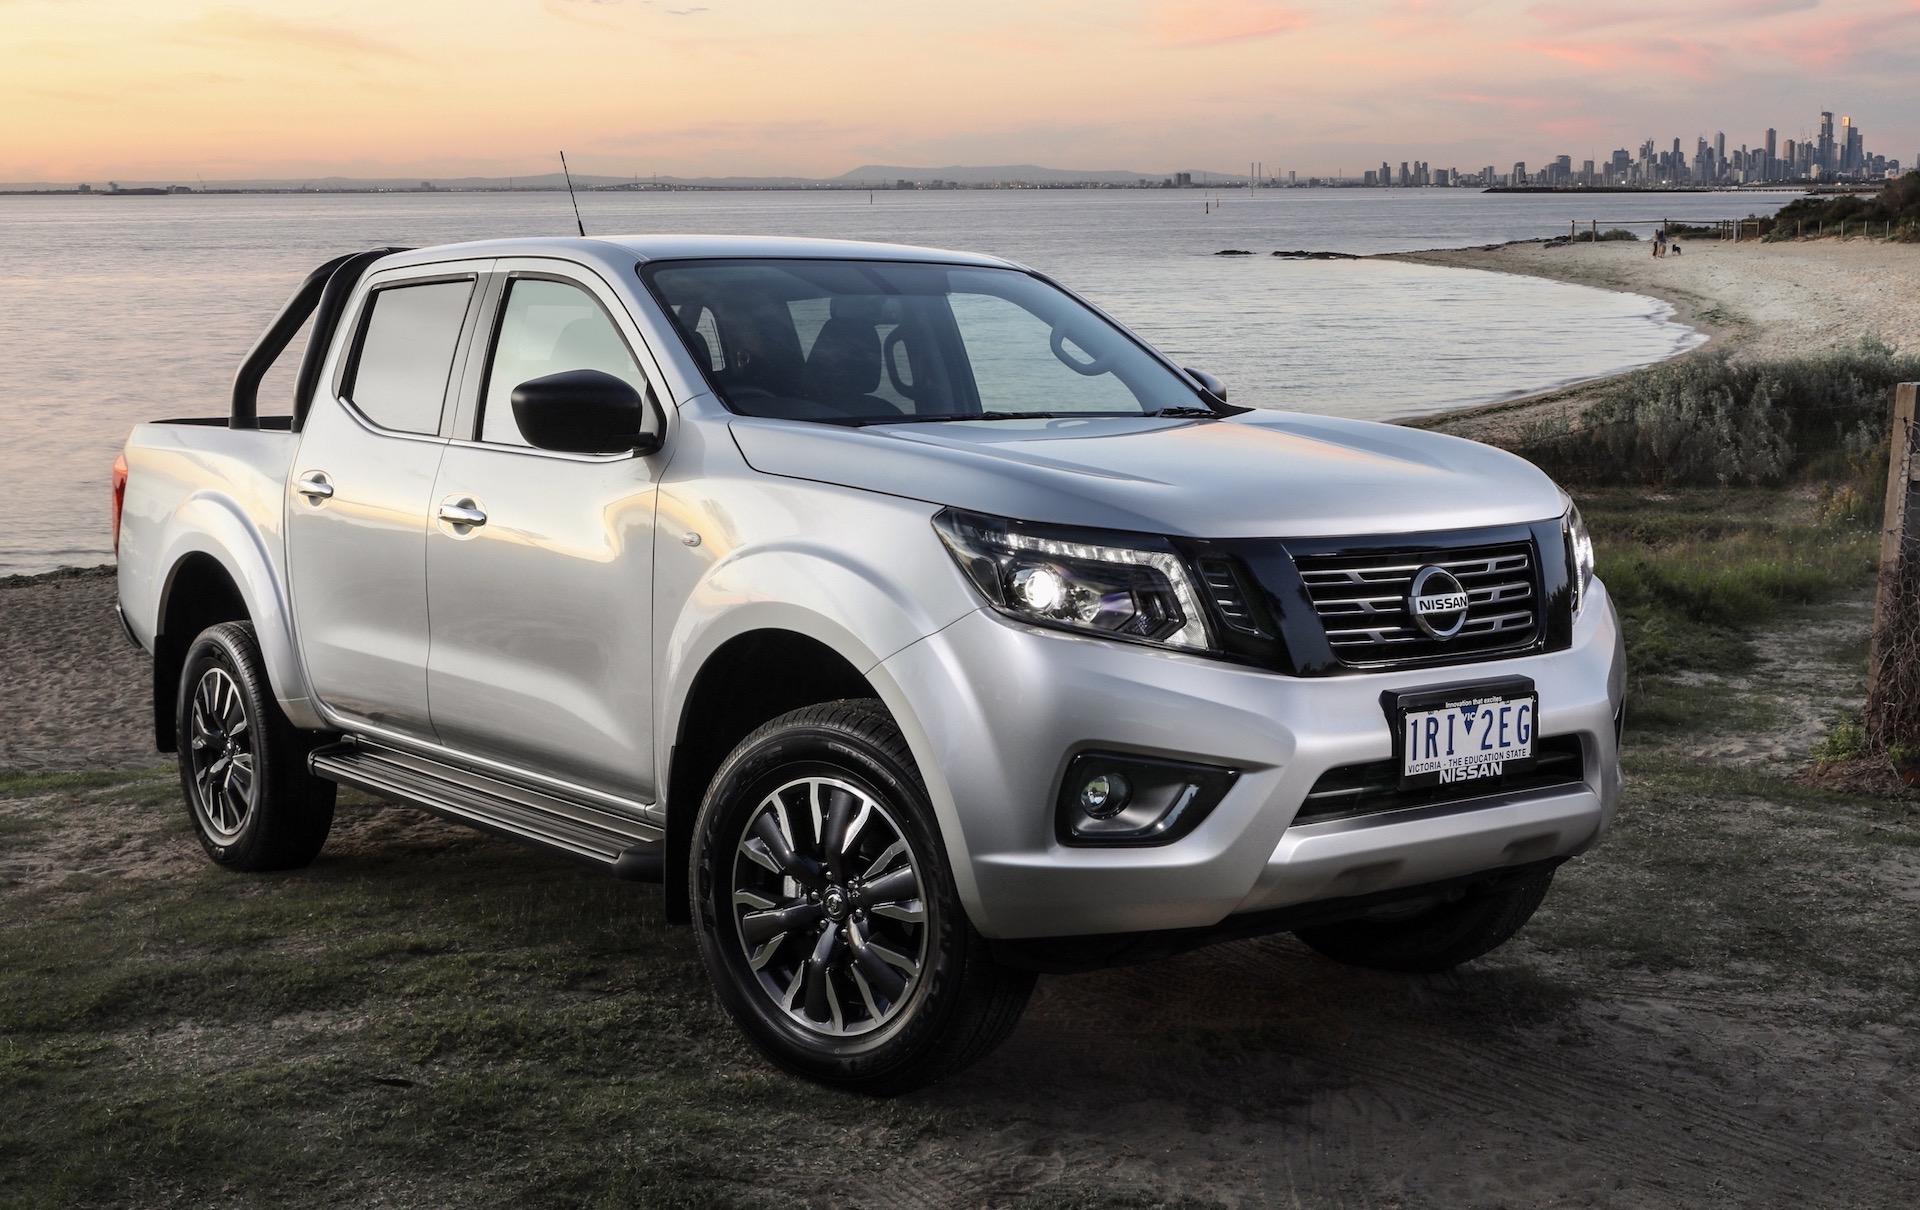 2020 Nissan Navara update now on sale in Australia